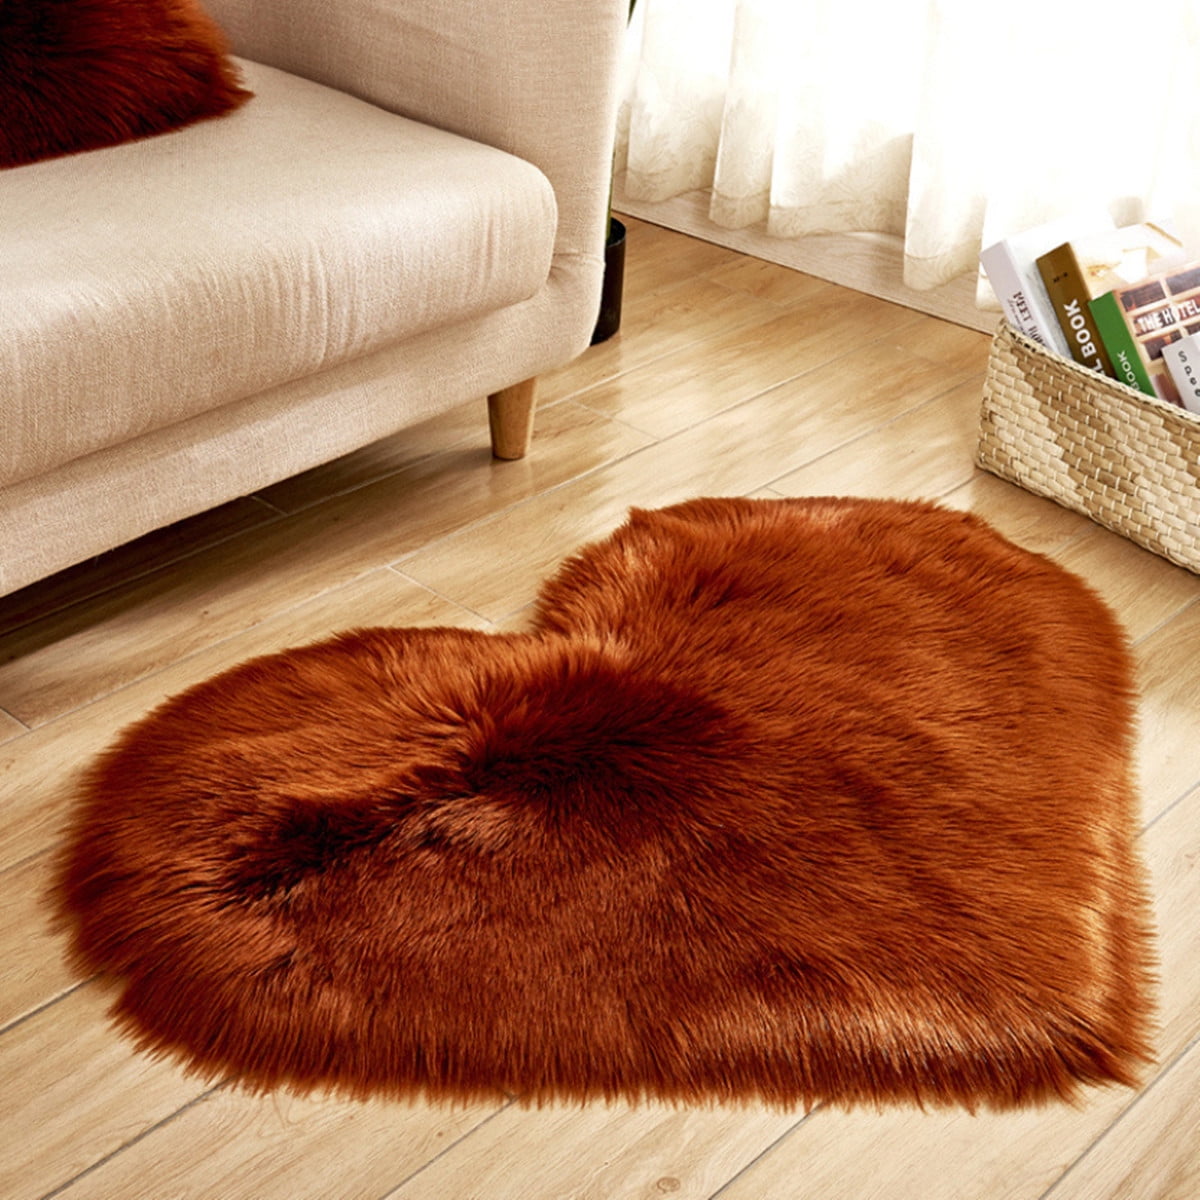 Heart Shaped Fluffy Rugs Shaggy Rug Soft Fur Bedroom Home Floor Carpet Room Mat 